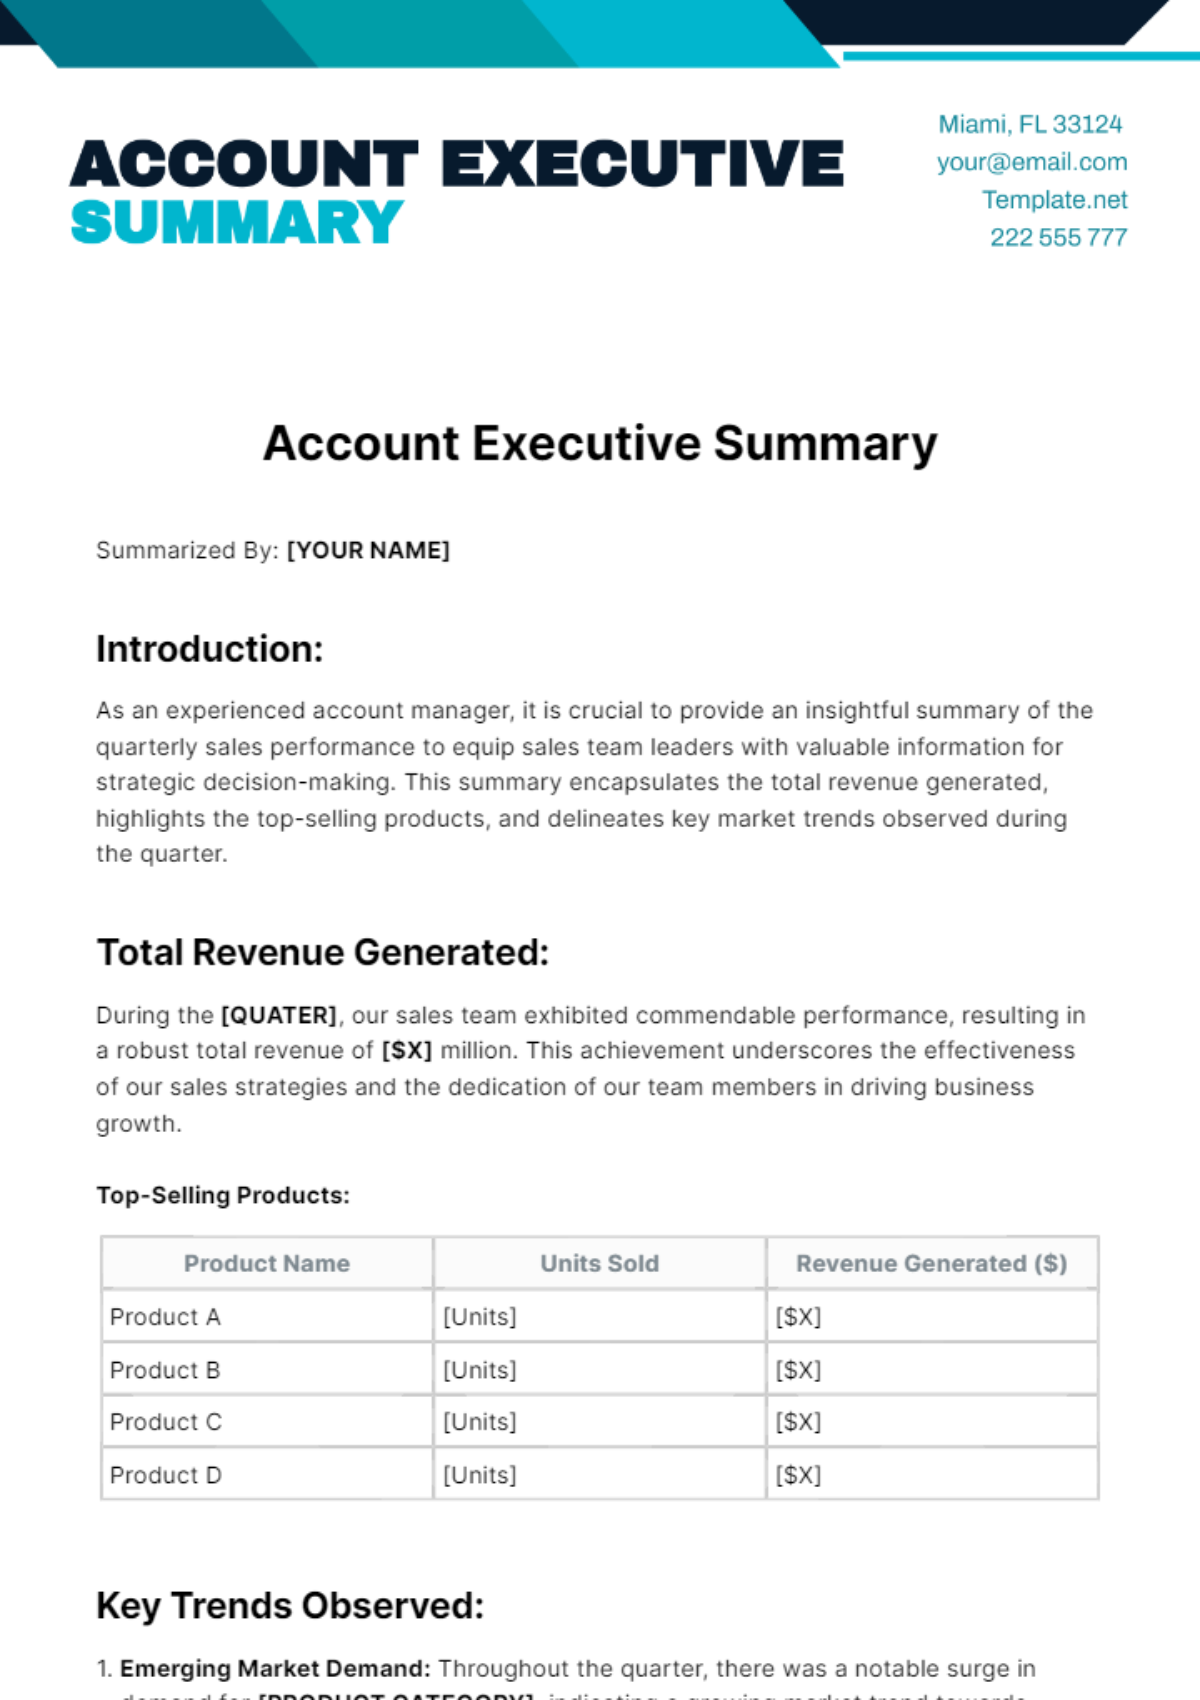 Account Executive Summary Template